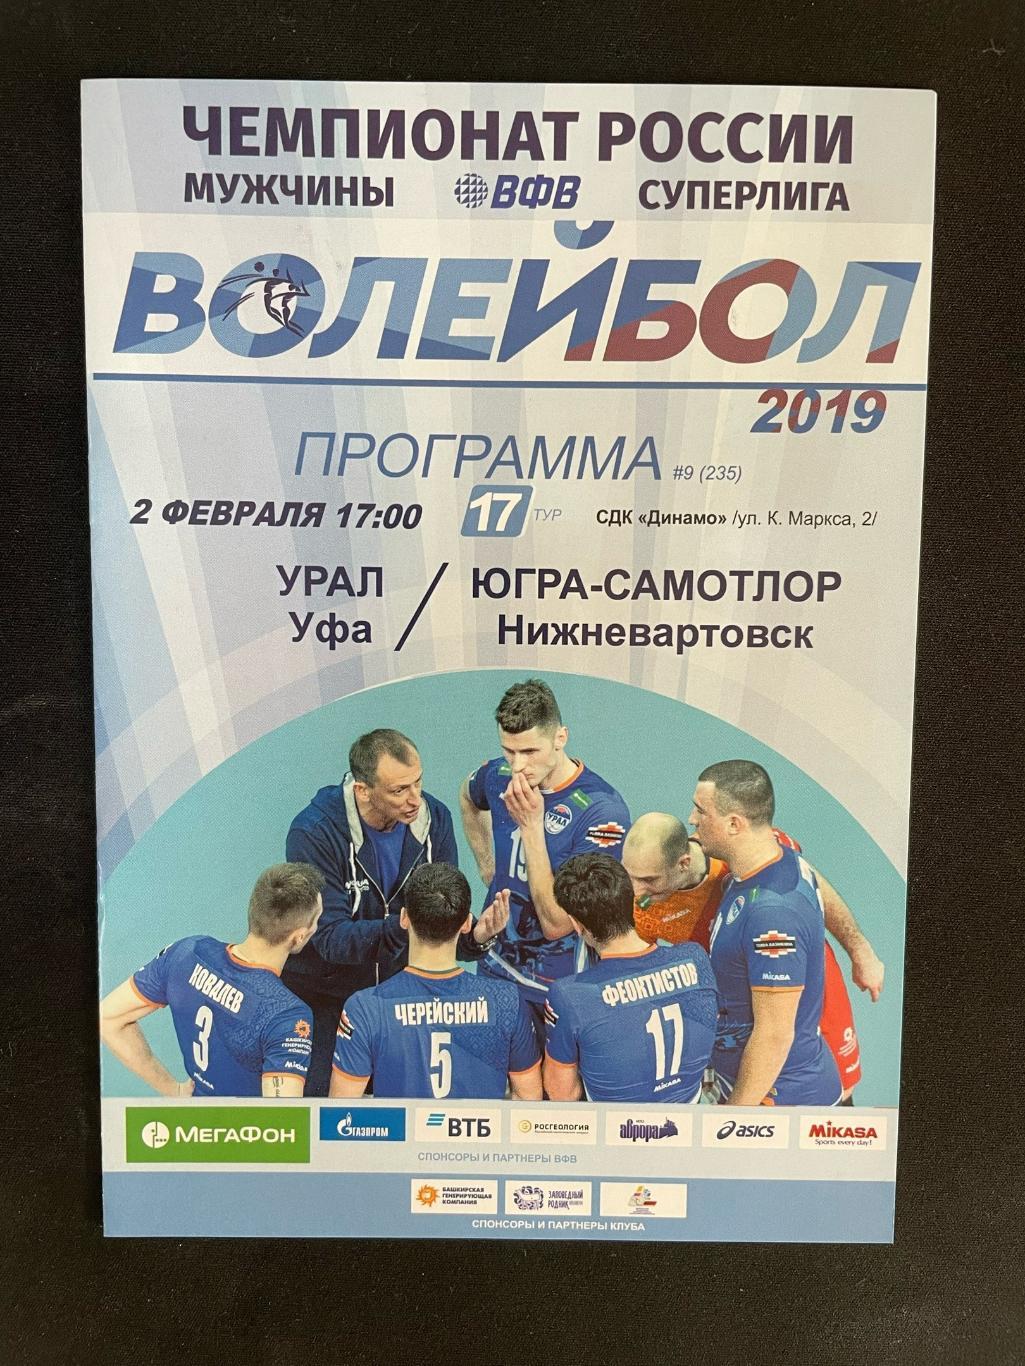 Урал Уфа - Югра-Самотлор Нижневартовск 2019